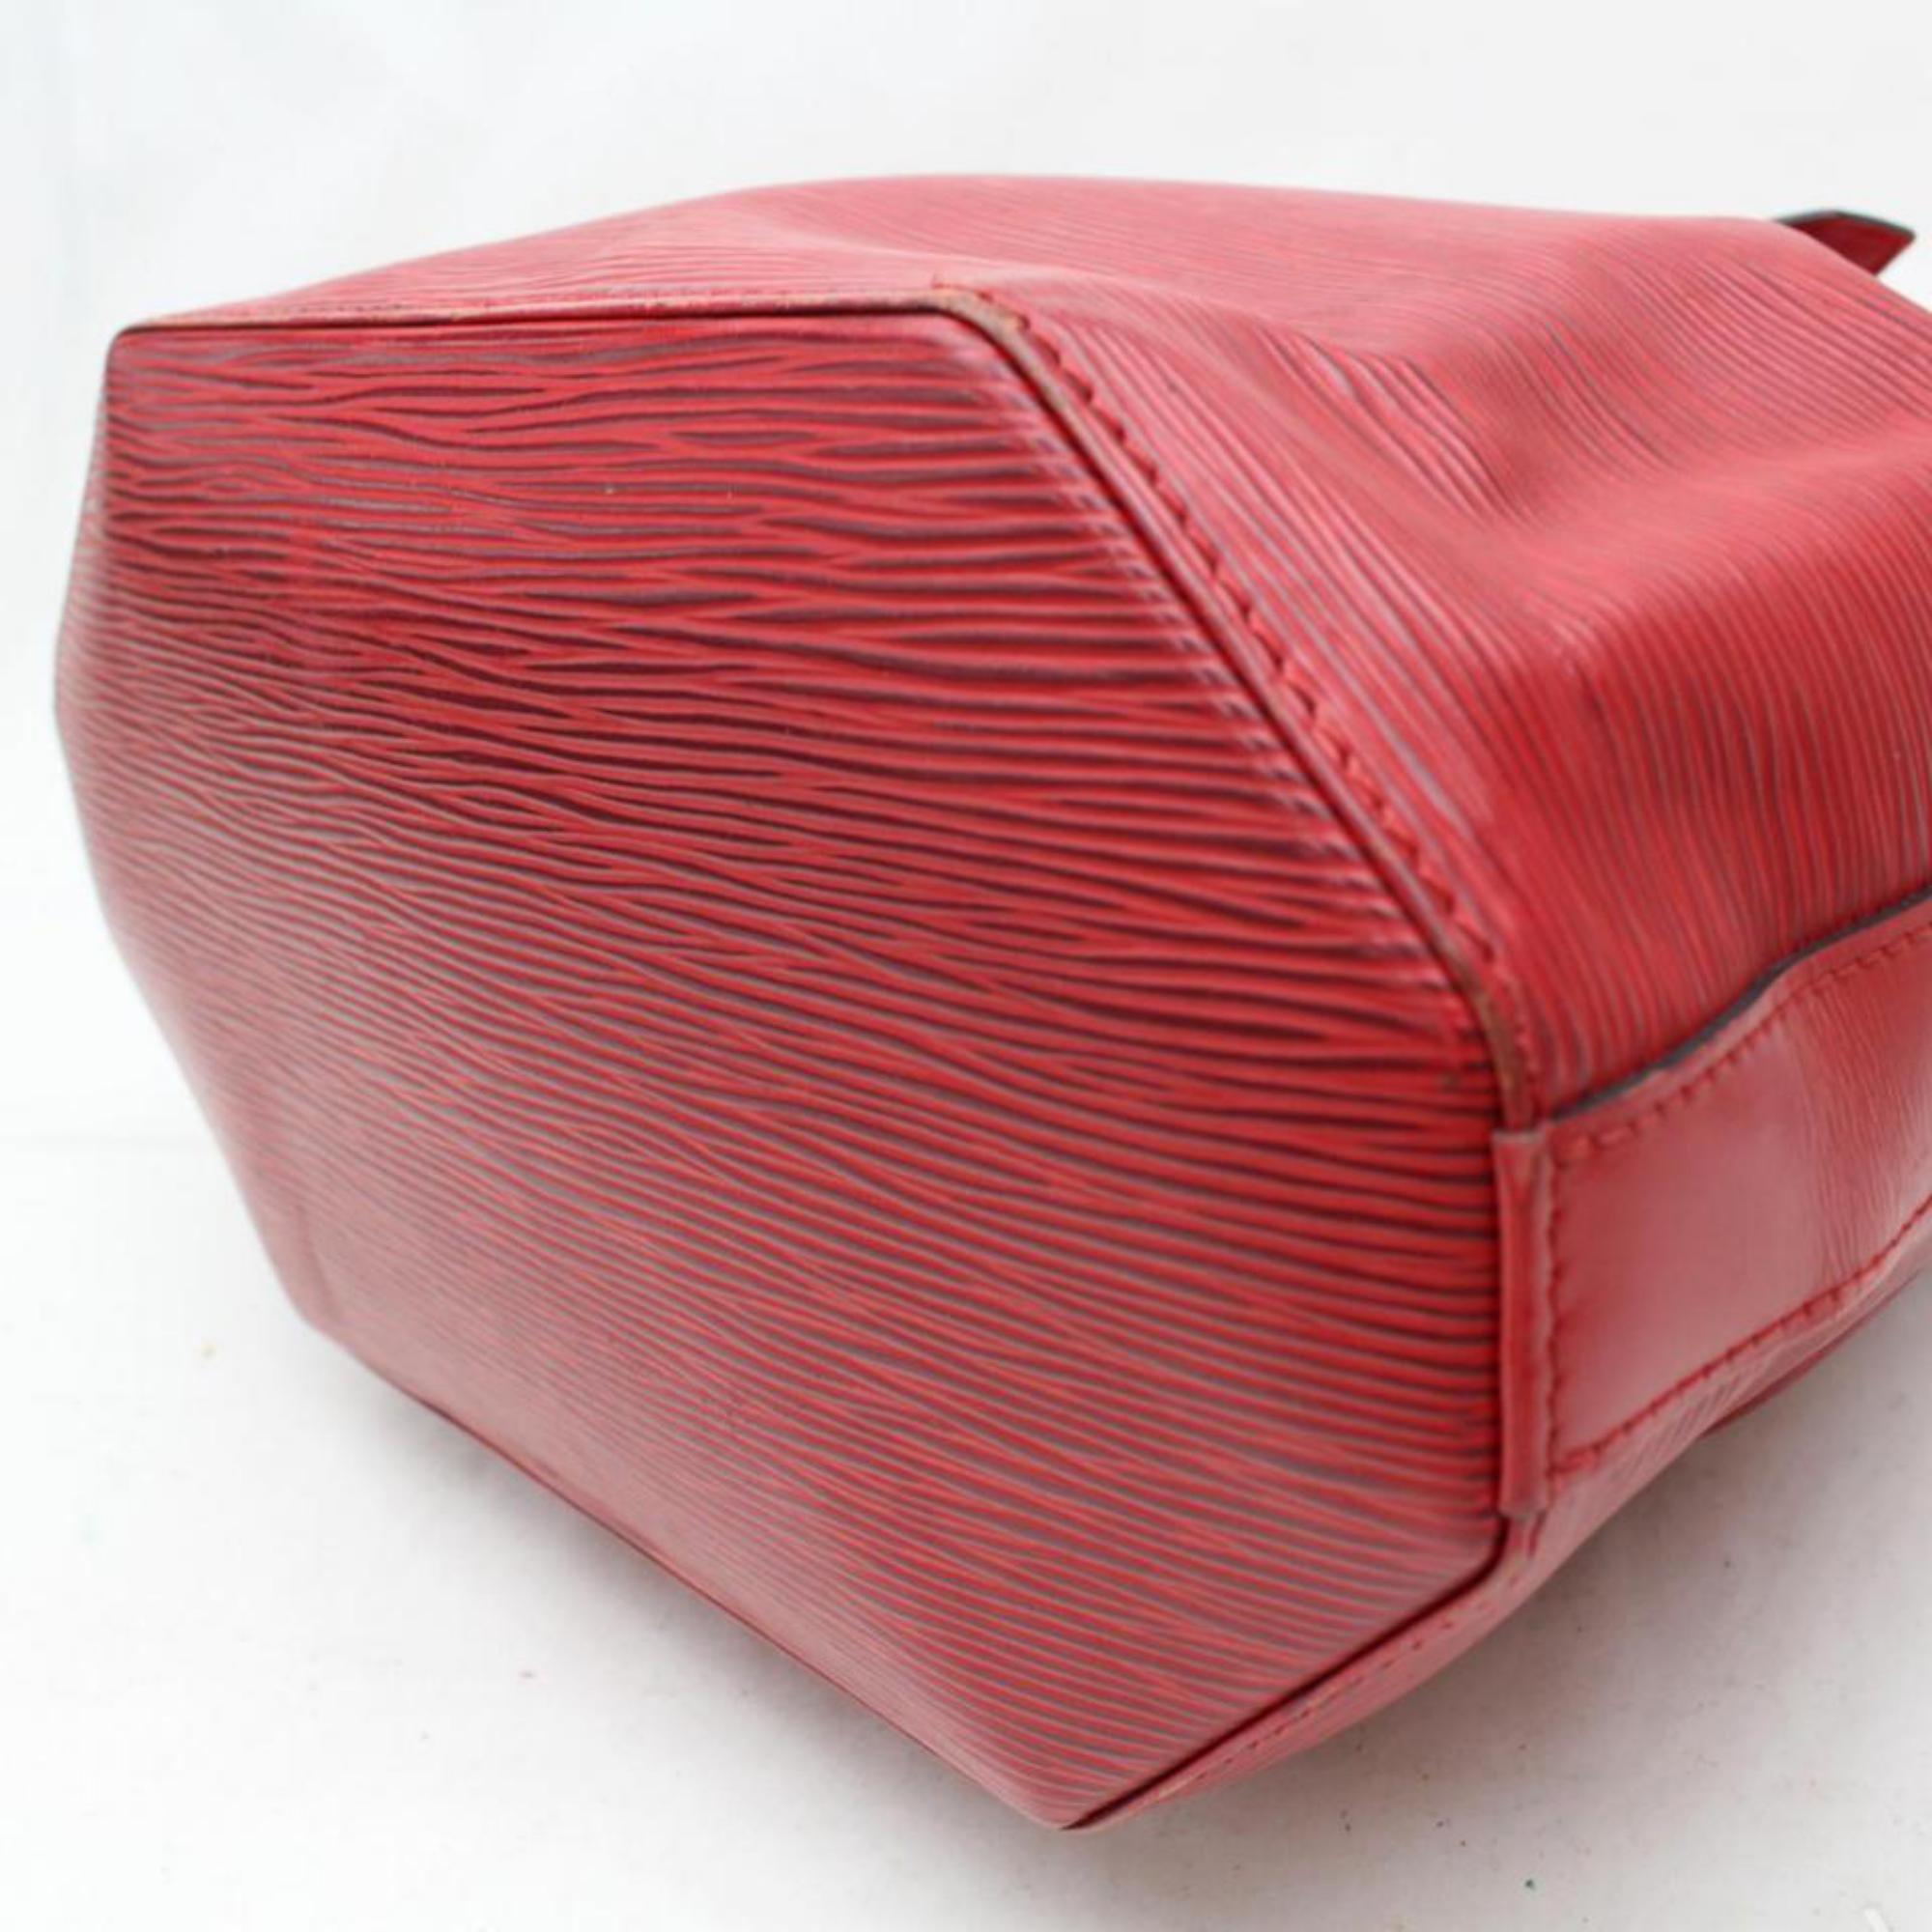 Louis Vuitton Sac D'epaule Epi 866272 Red Leather Shoulder Bag For Sale 5